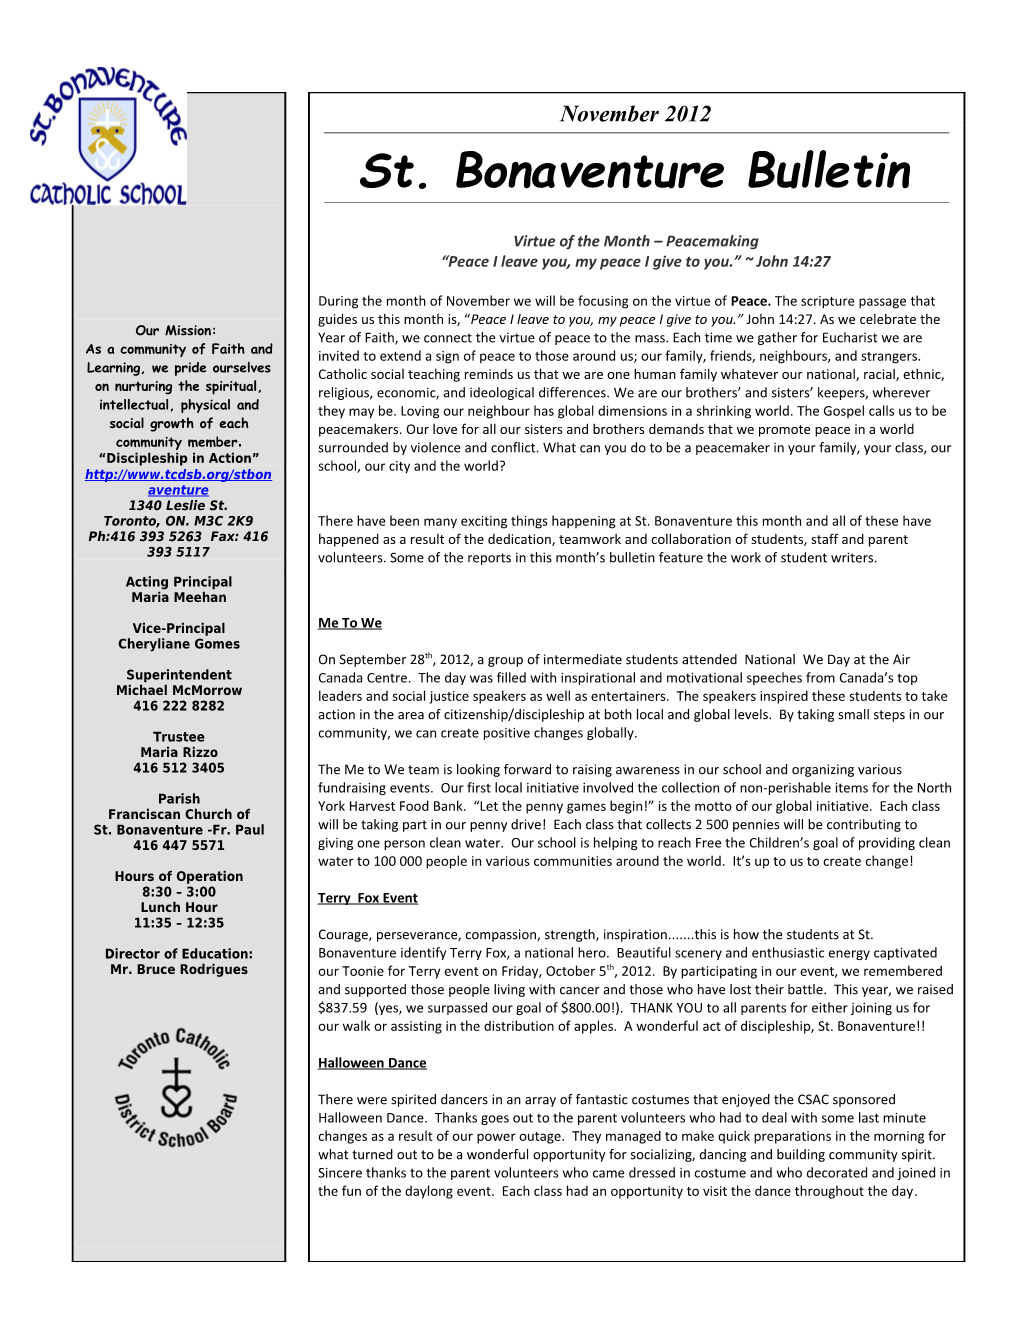 November 2012 Bulletin Final Draft for Portal